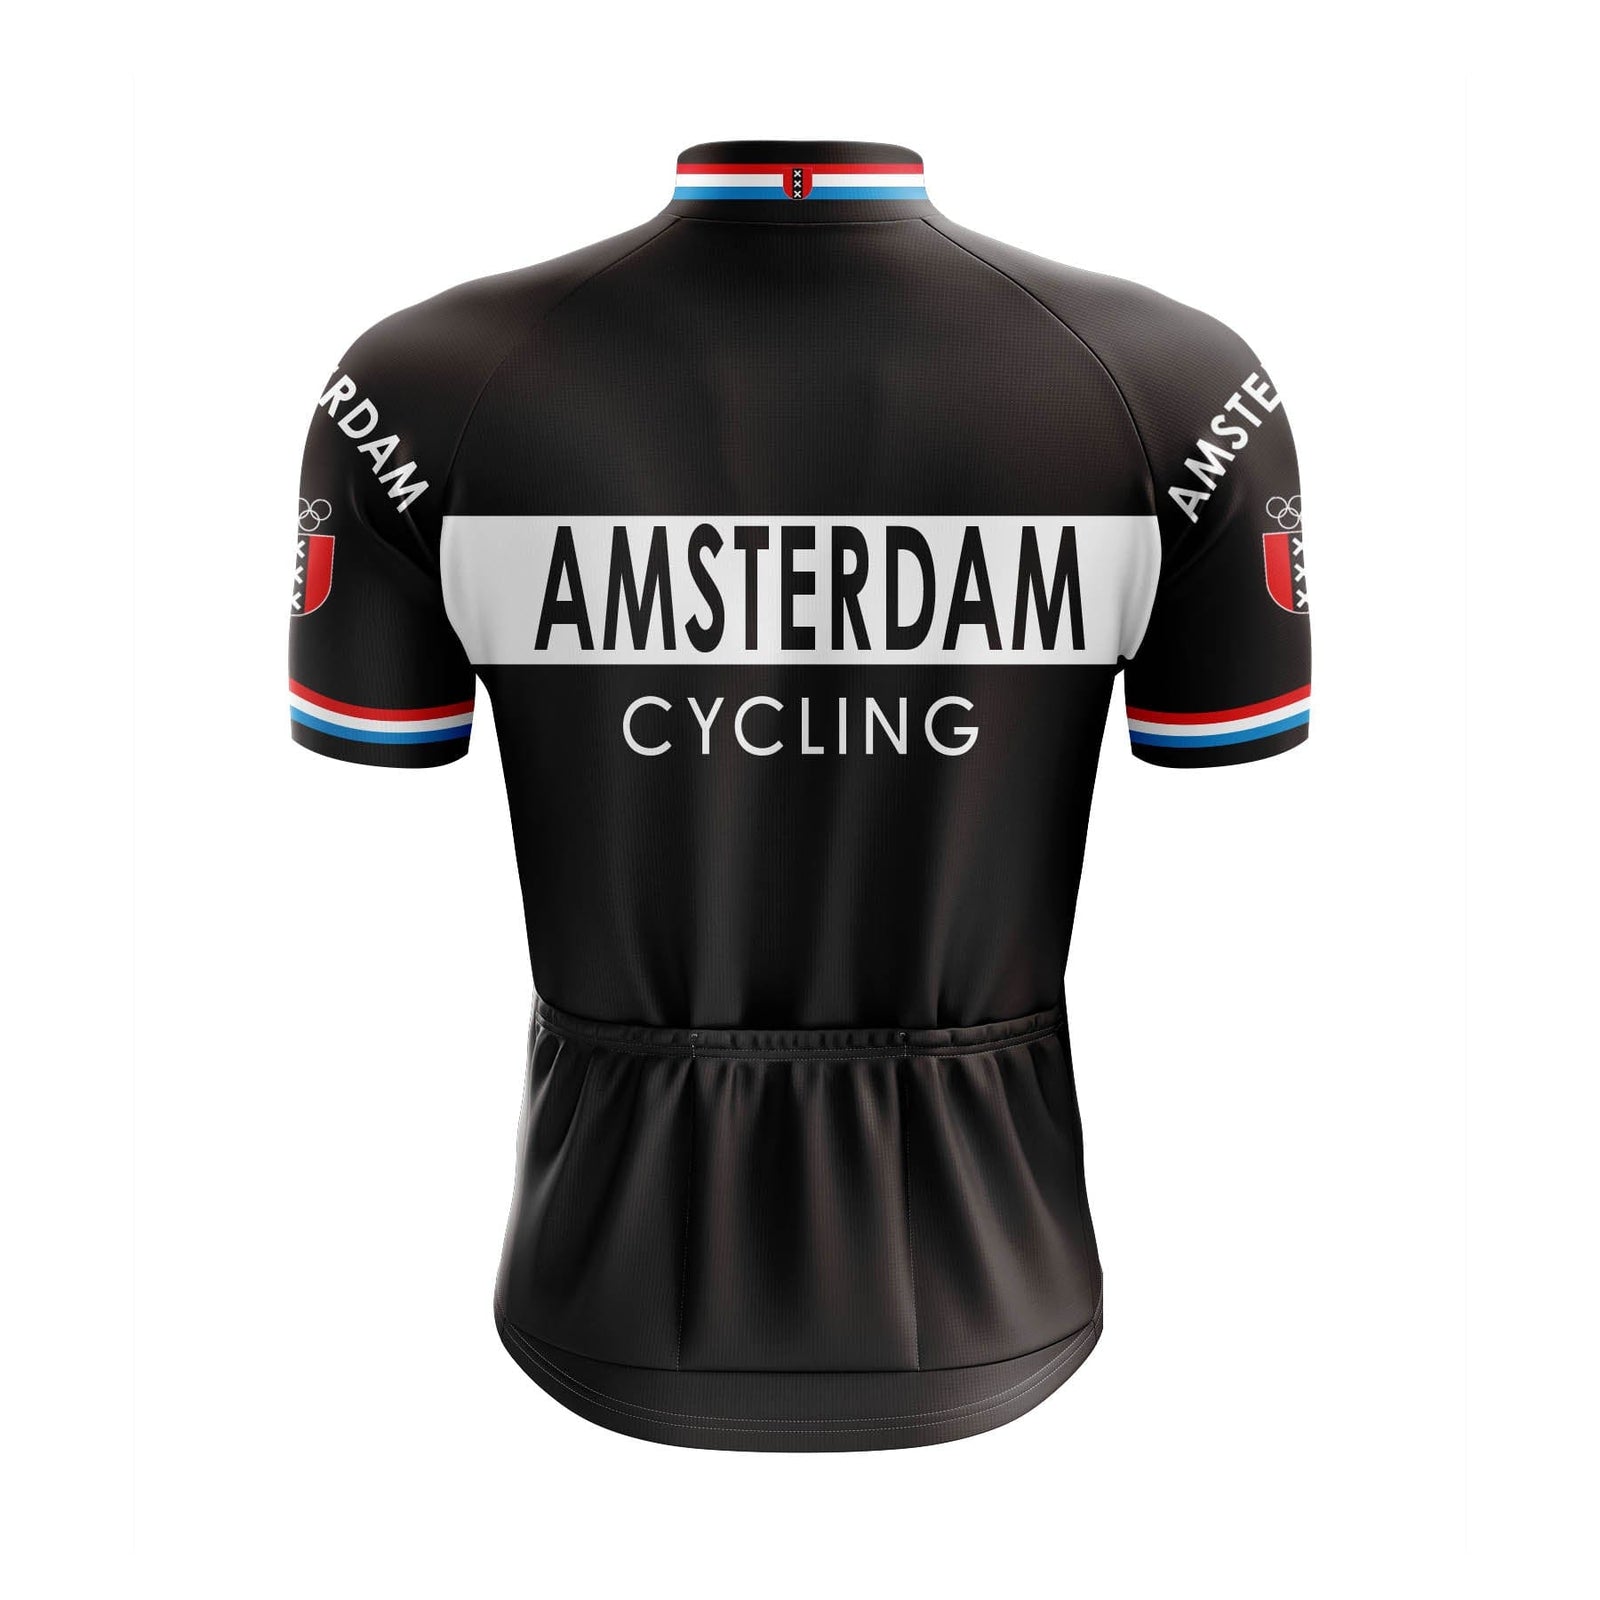 Montella Cycling Cycling Kit Amsterdam Black Cycling Jersey or Bibs